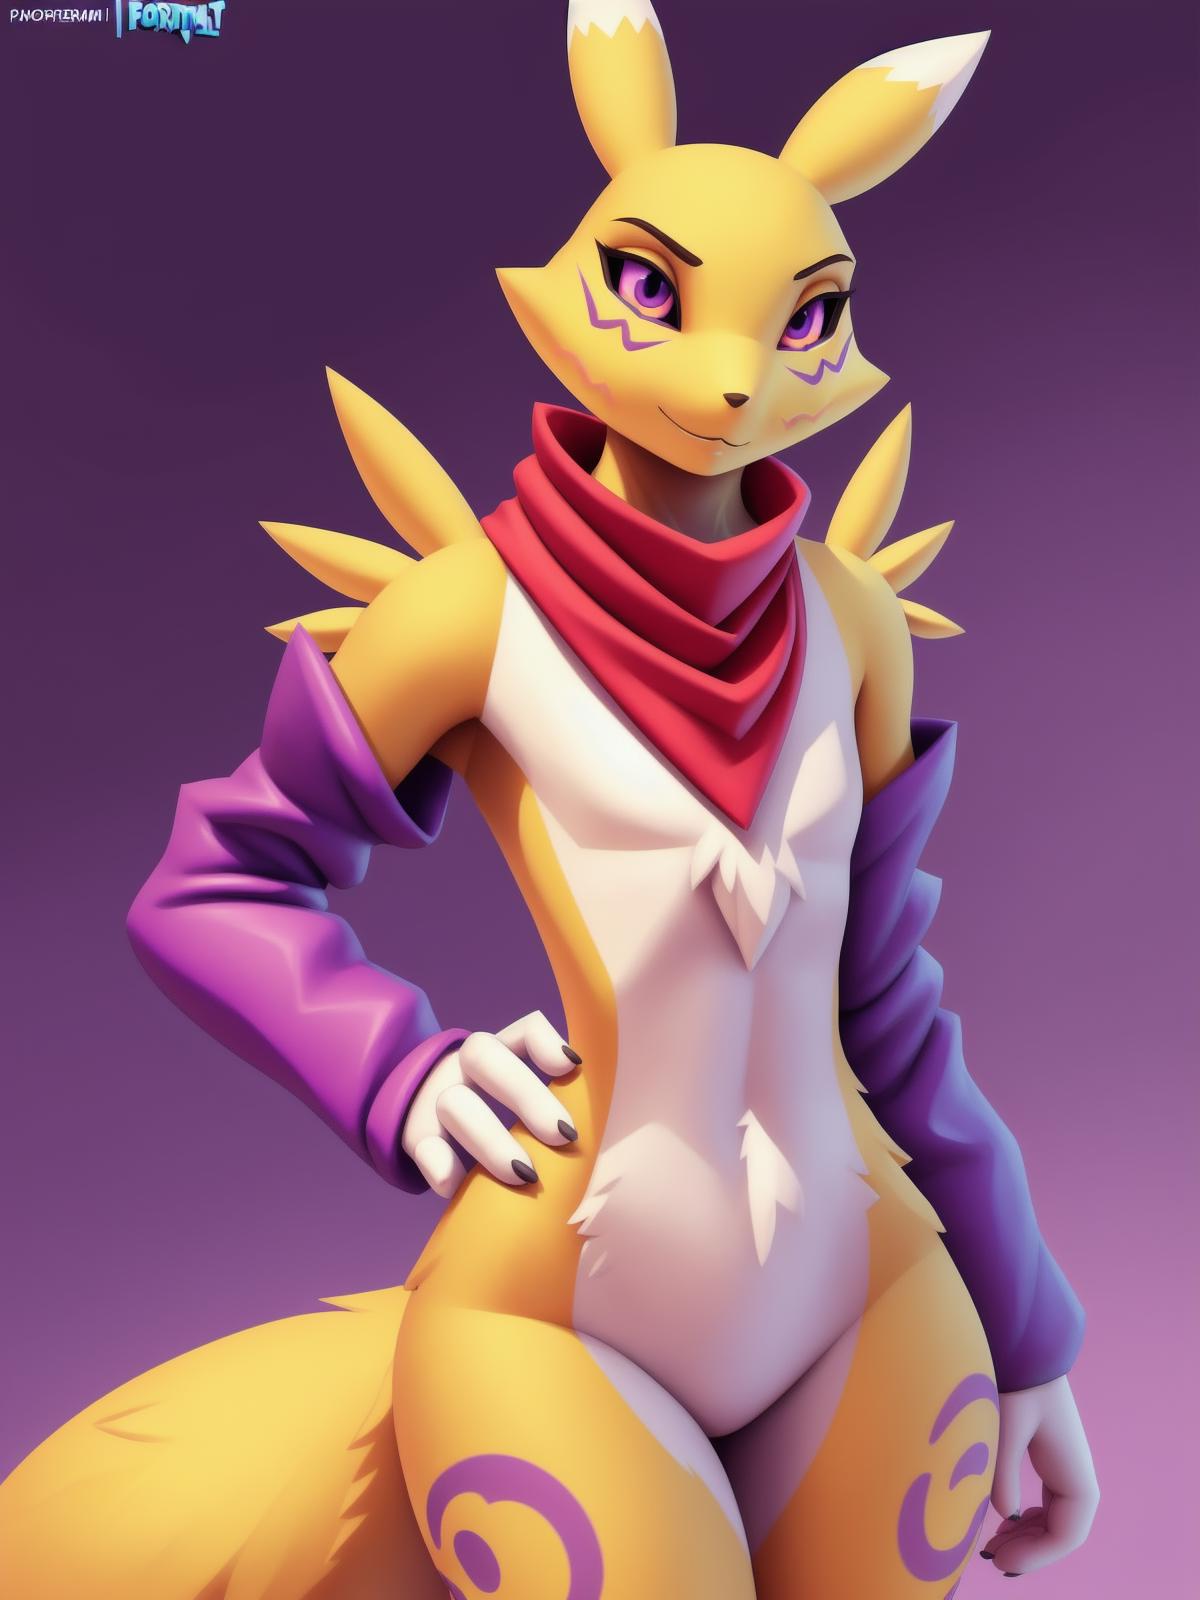 Renamon / Digimon image by rascal_jackal